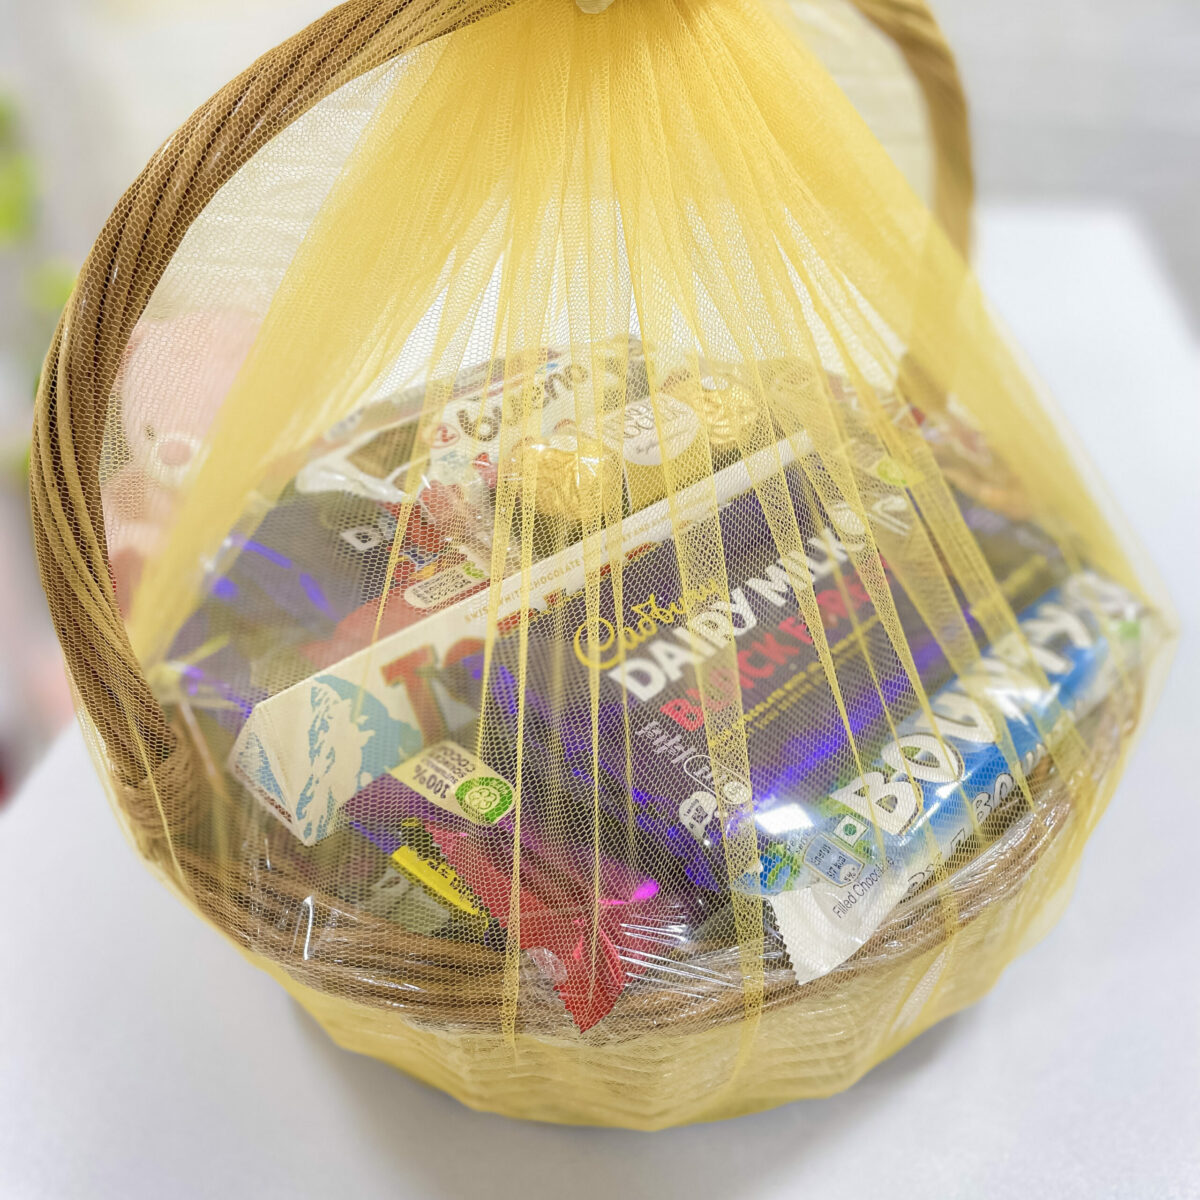 Chocolate Hamper, Chocolate Gift Hampers Online in Dubai - GDO